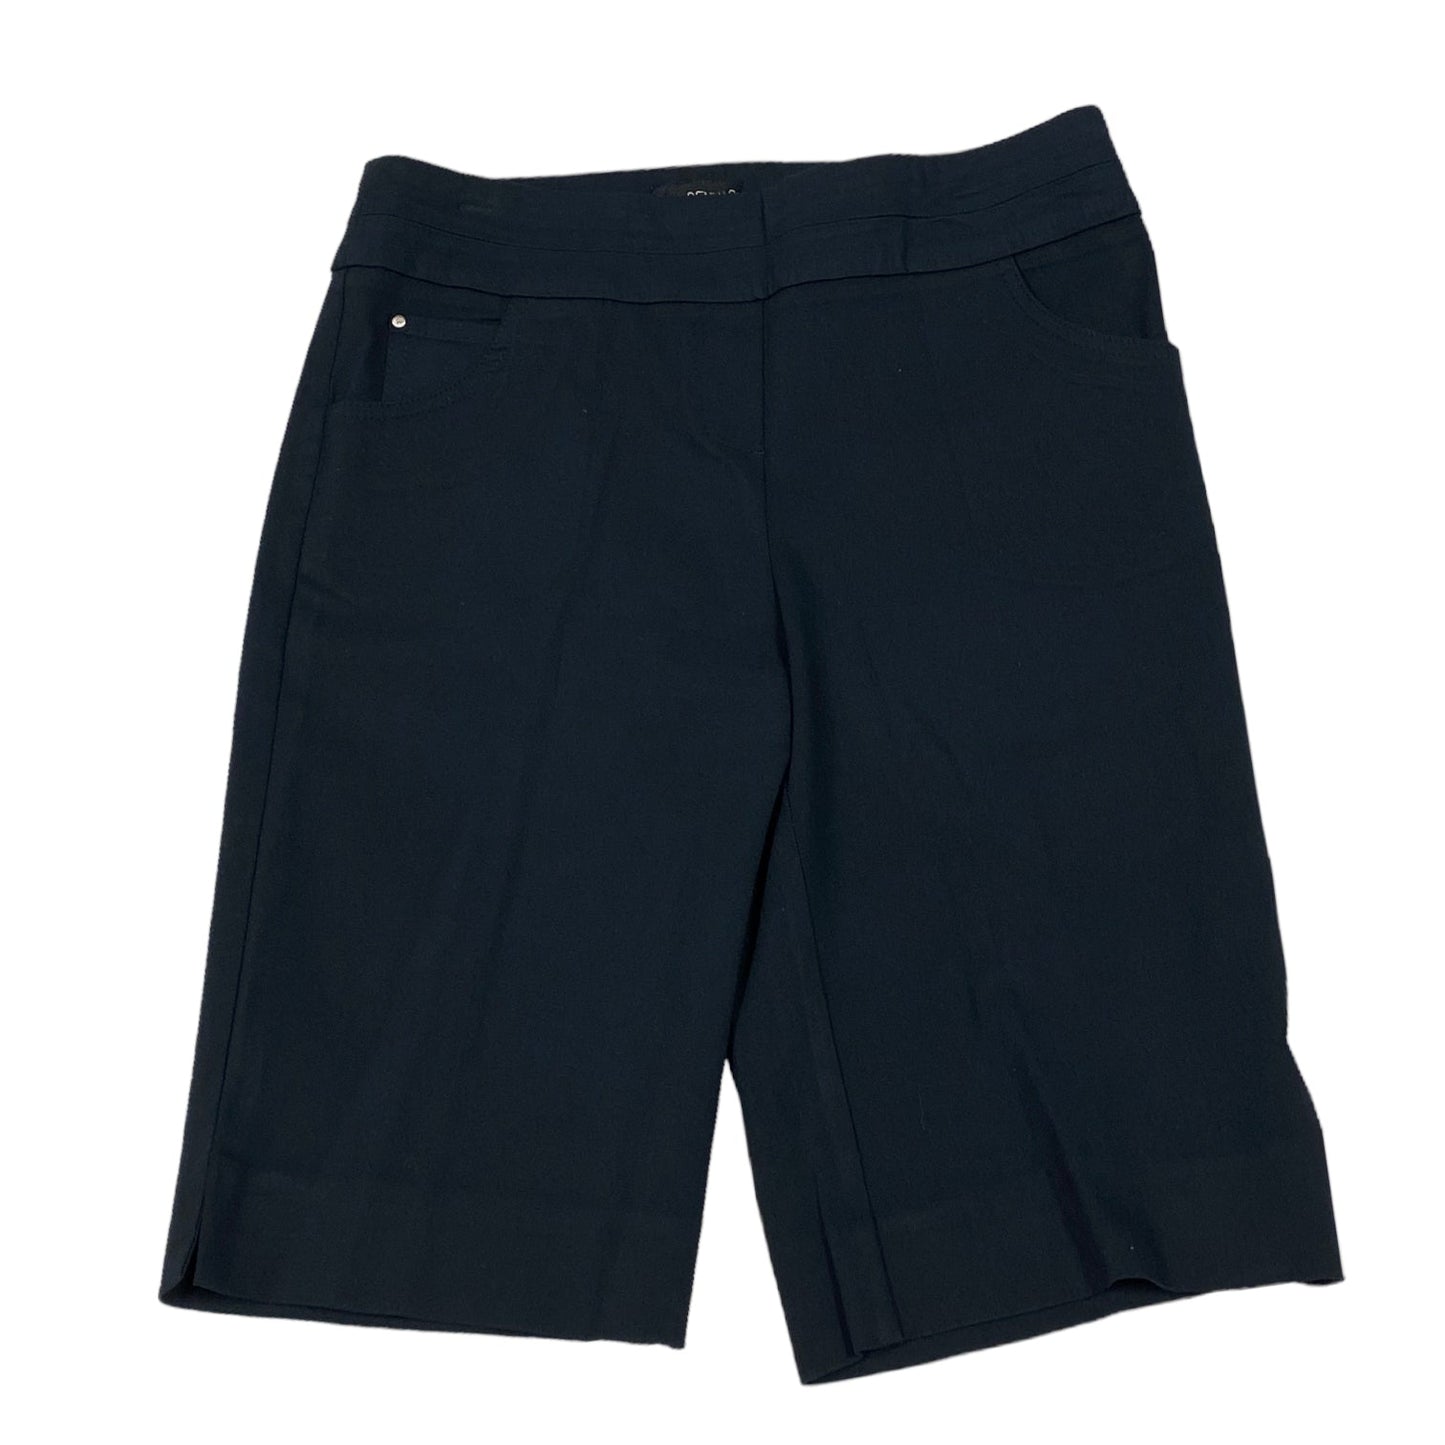 Shorts By RENUAR Size: 4